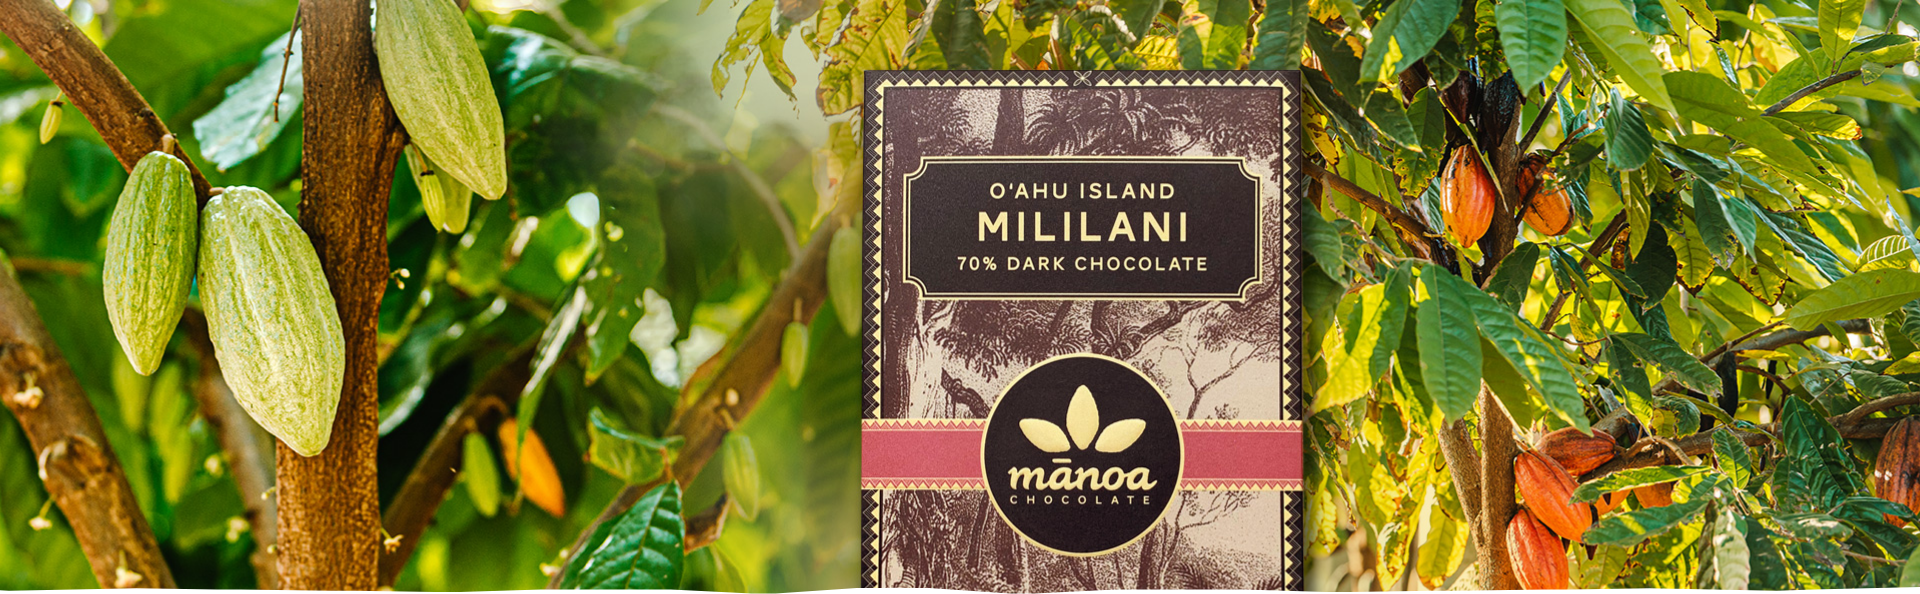 cacao trees and manoa choclate bar